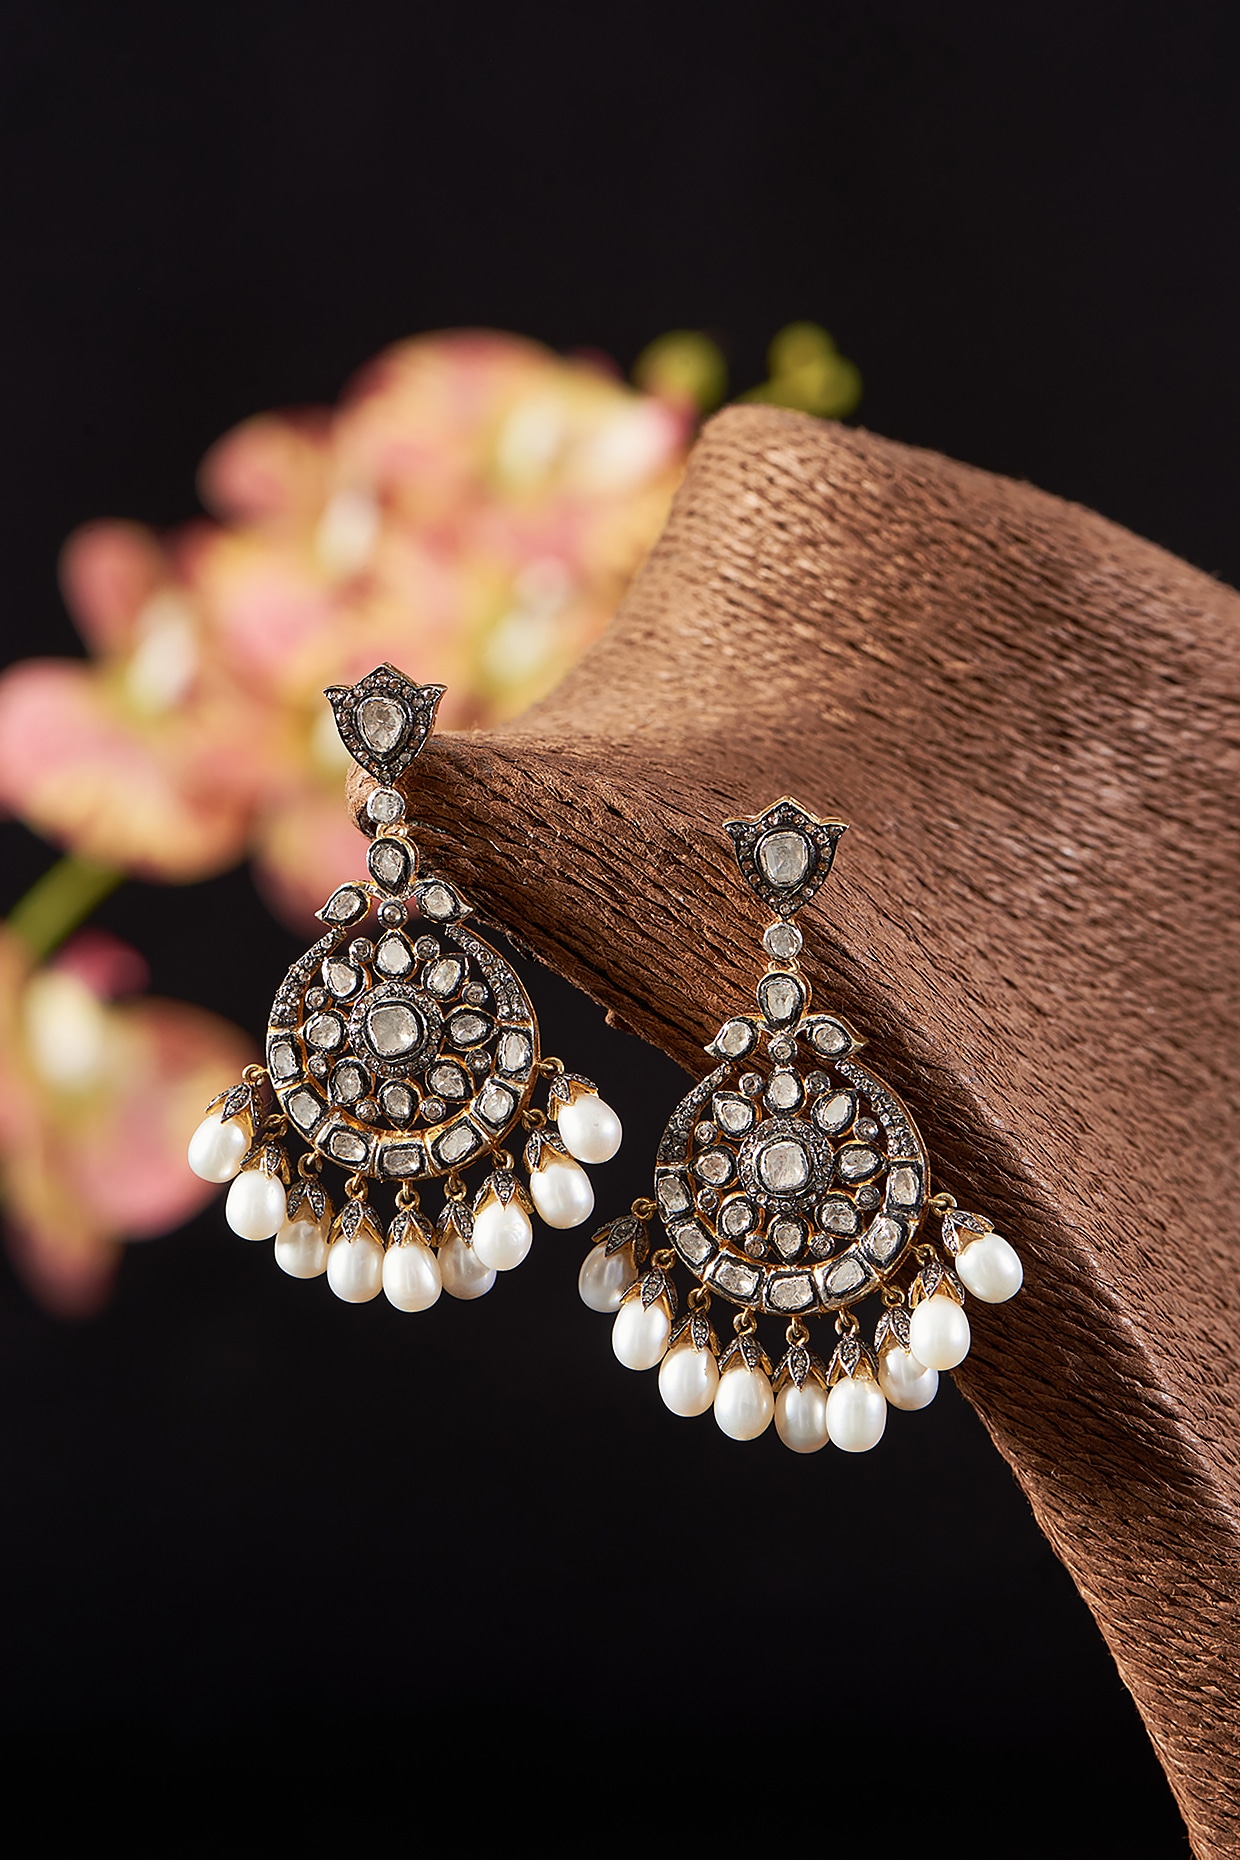 Love Kundan Jewellery? Buy it like a Pro! - Tarinika India